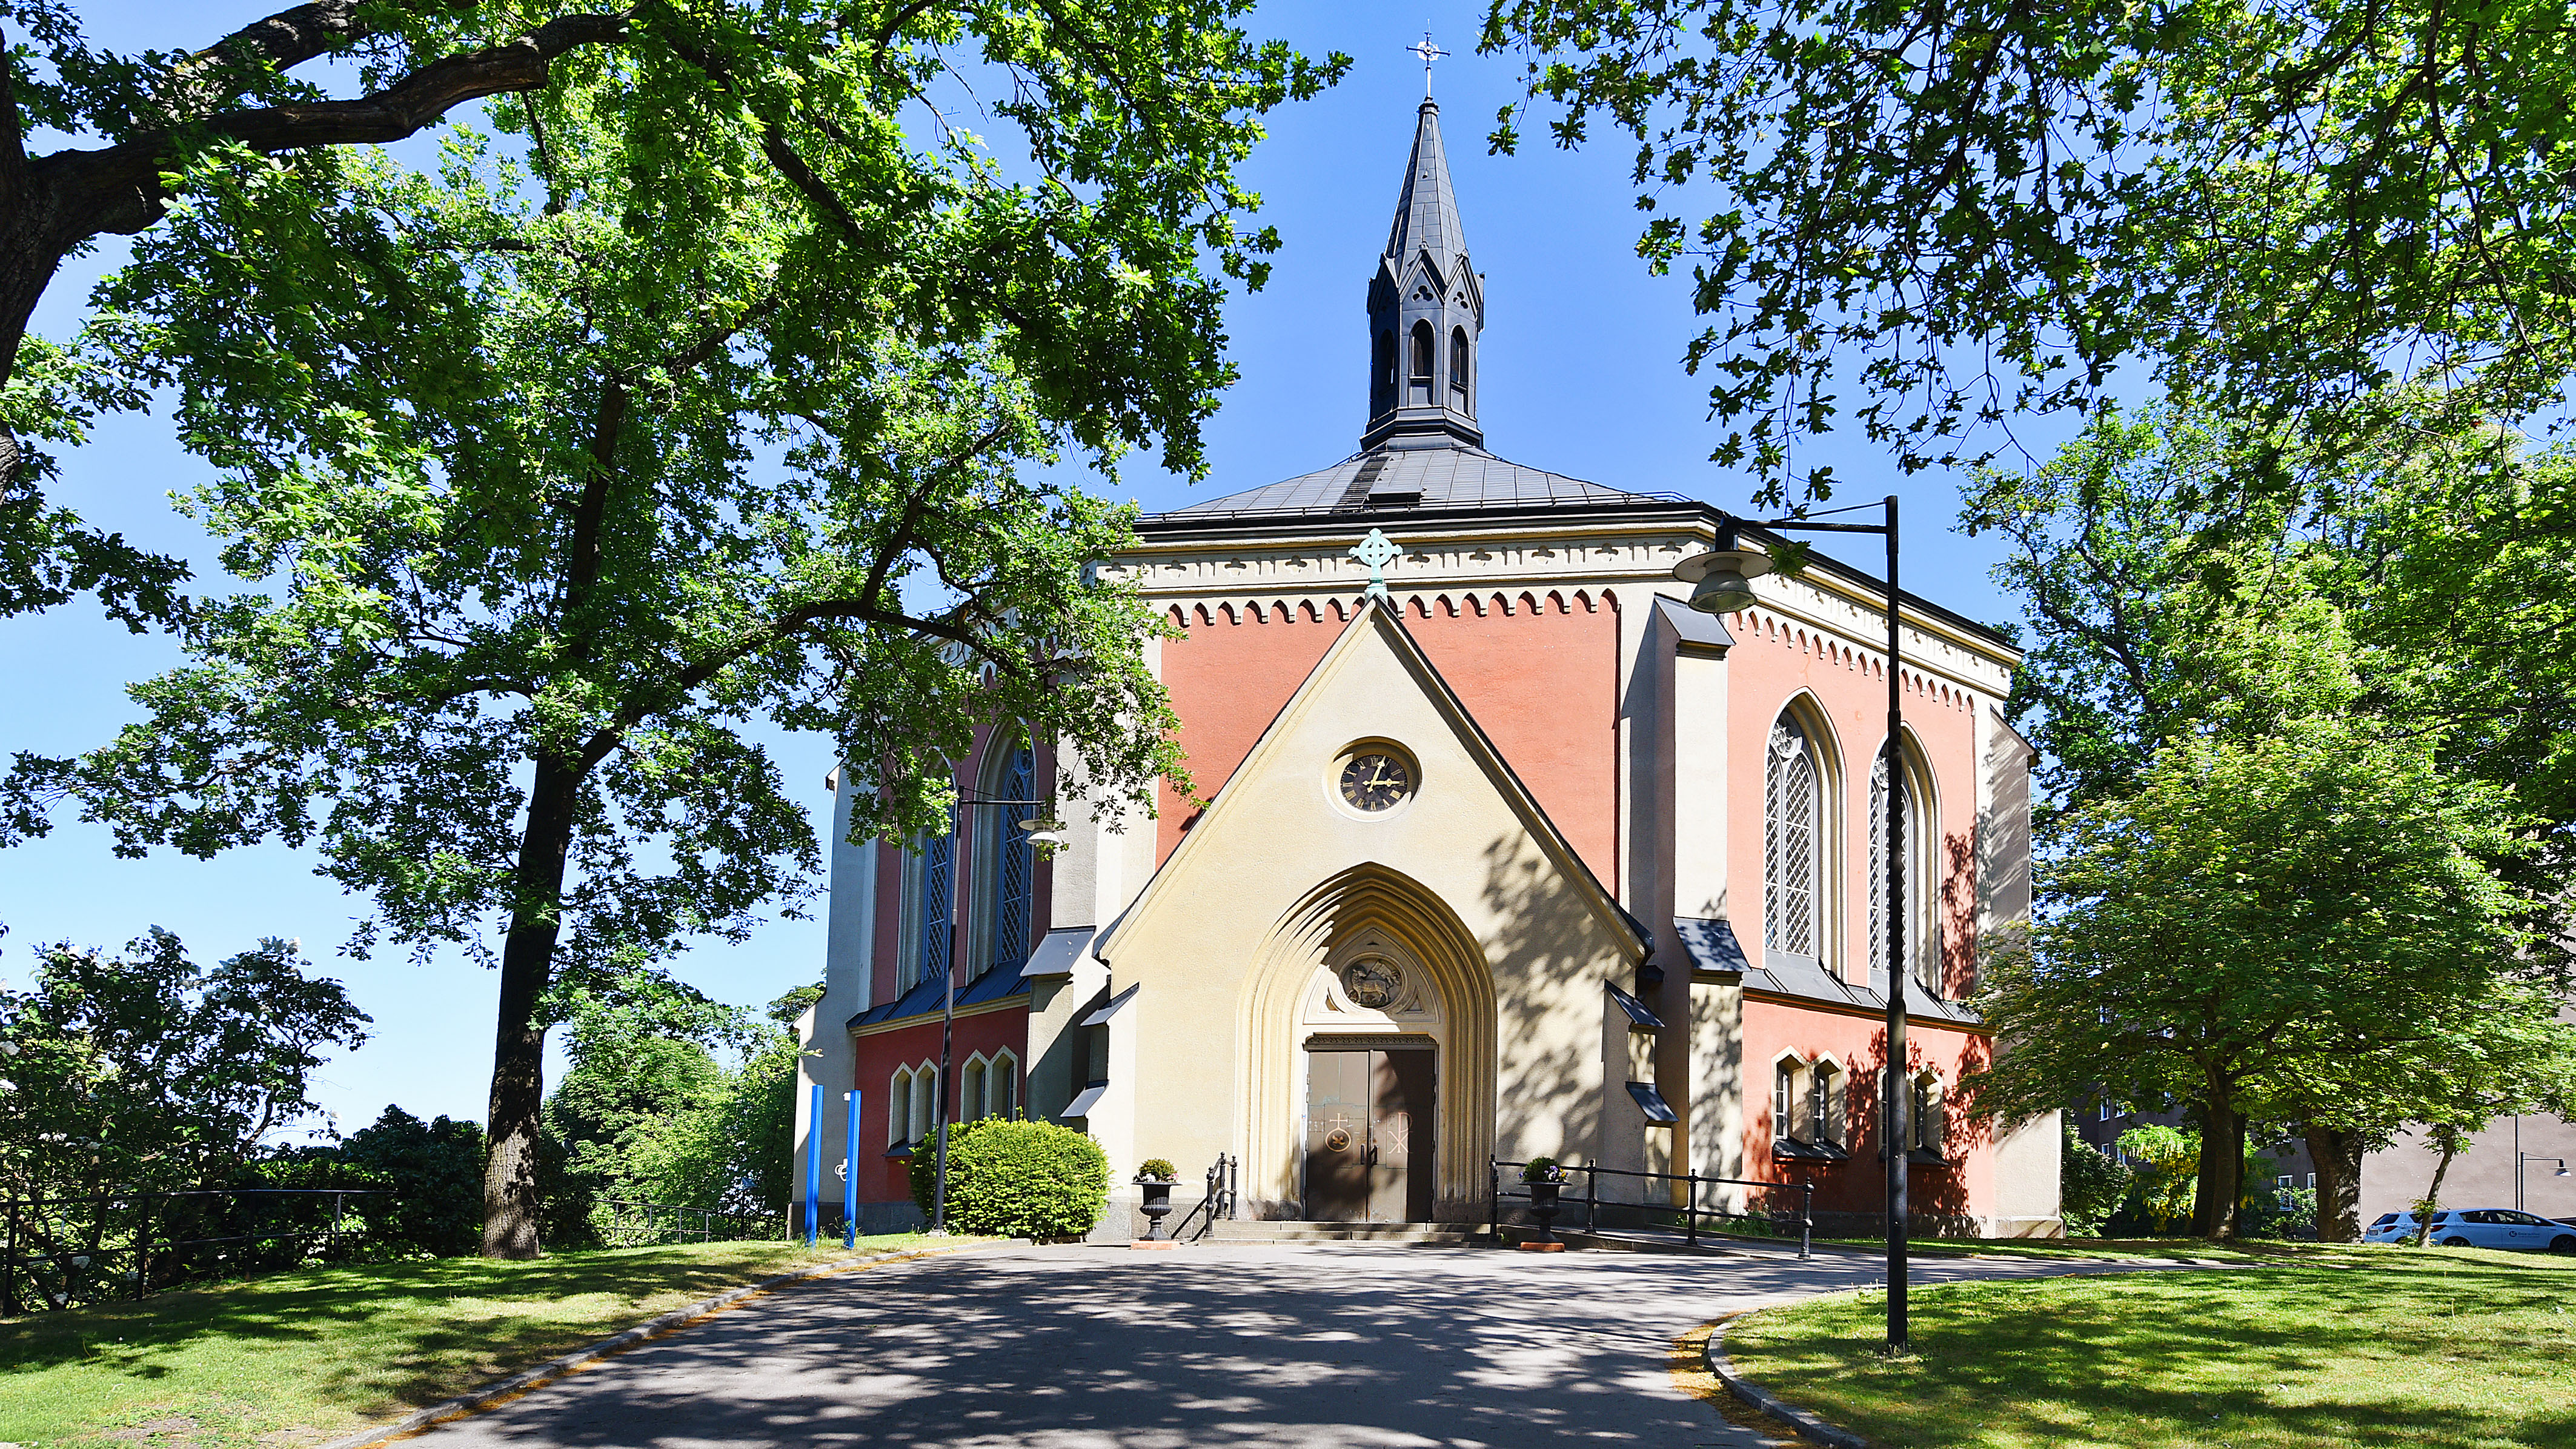 Ersta church at Erstaklippan